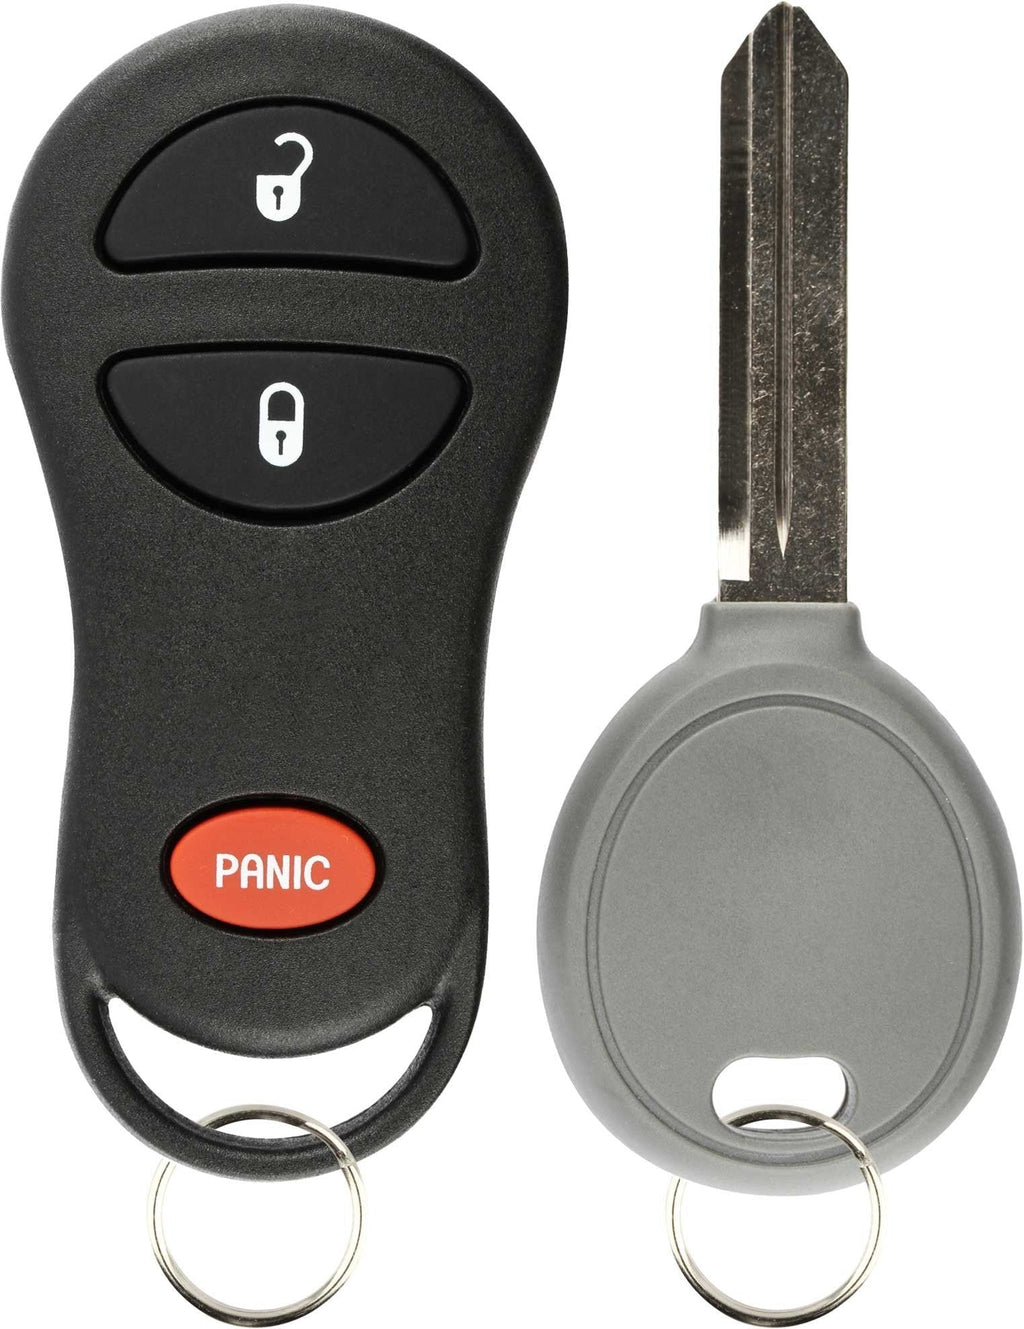  [AUSTRALIA] - KeylessOption Keyless Entry Remote Fob Uncut Ignition Car Key Replacement for GQ43VT17T, 04686481